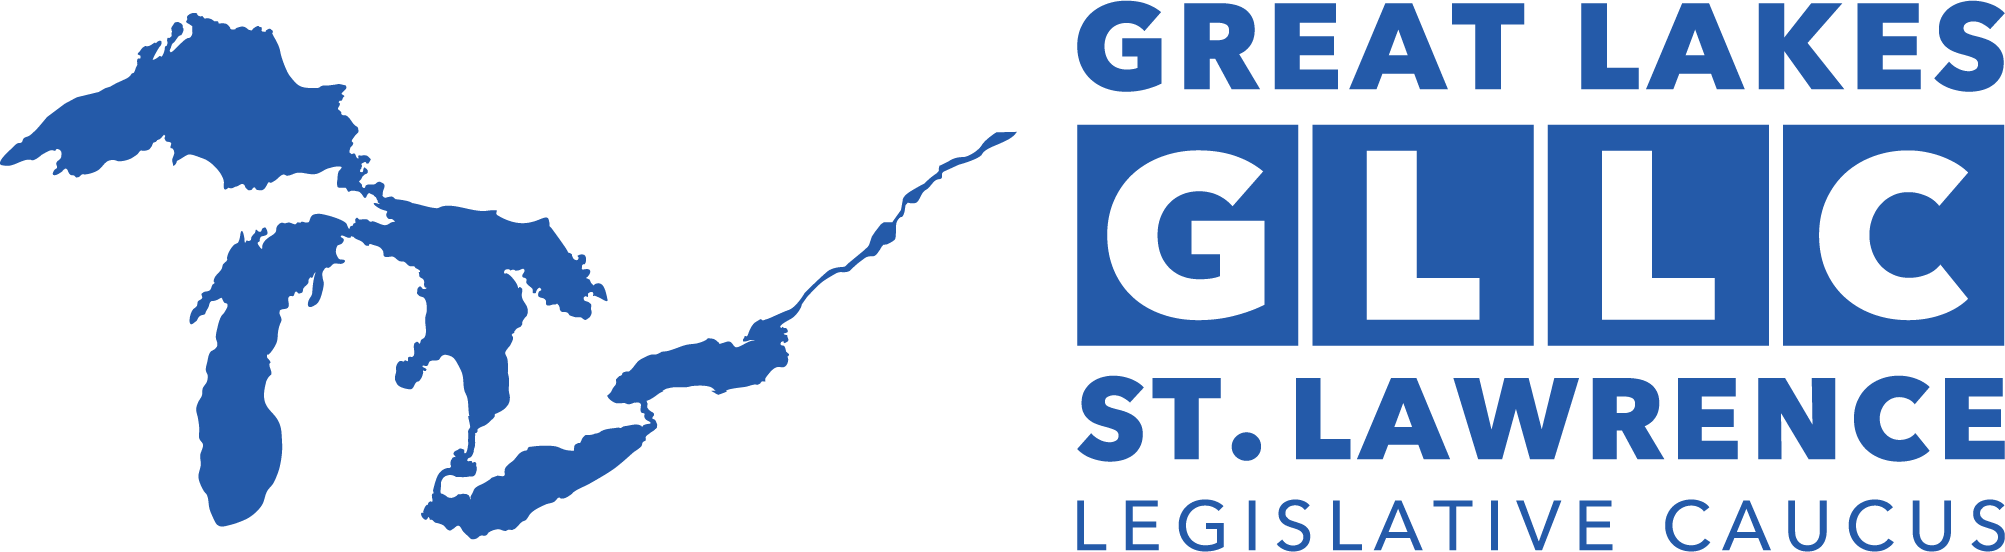 Great Lakes-St. Lawrence Legislative Caucus